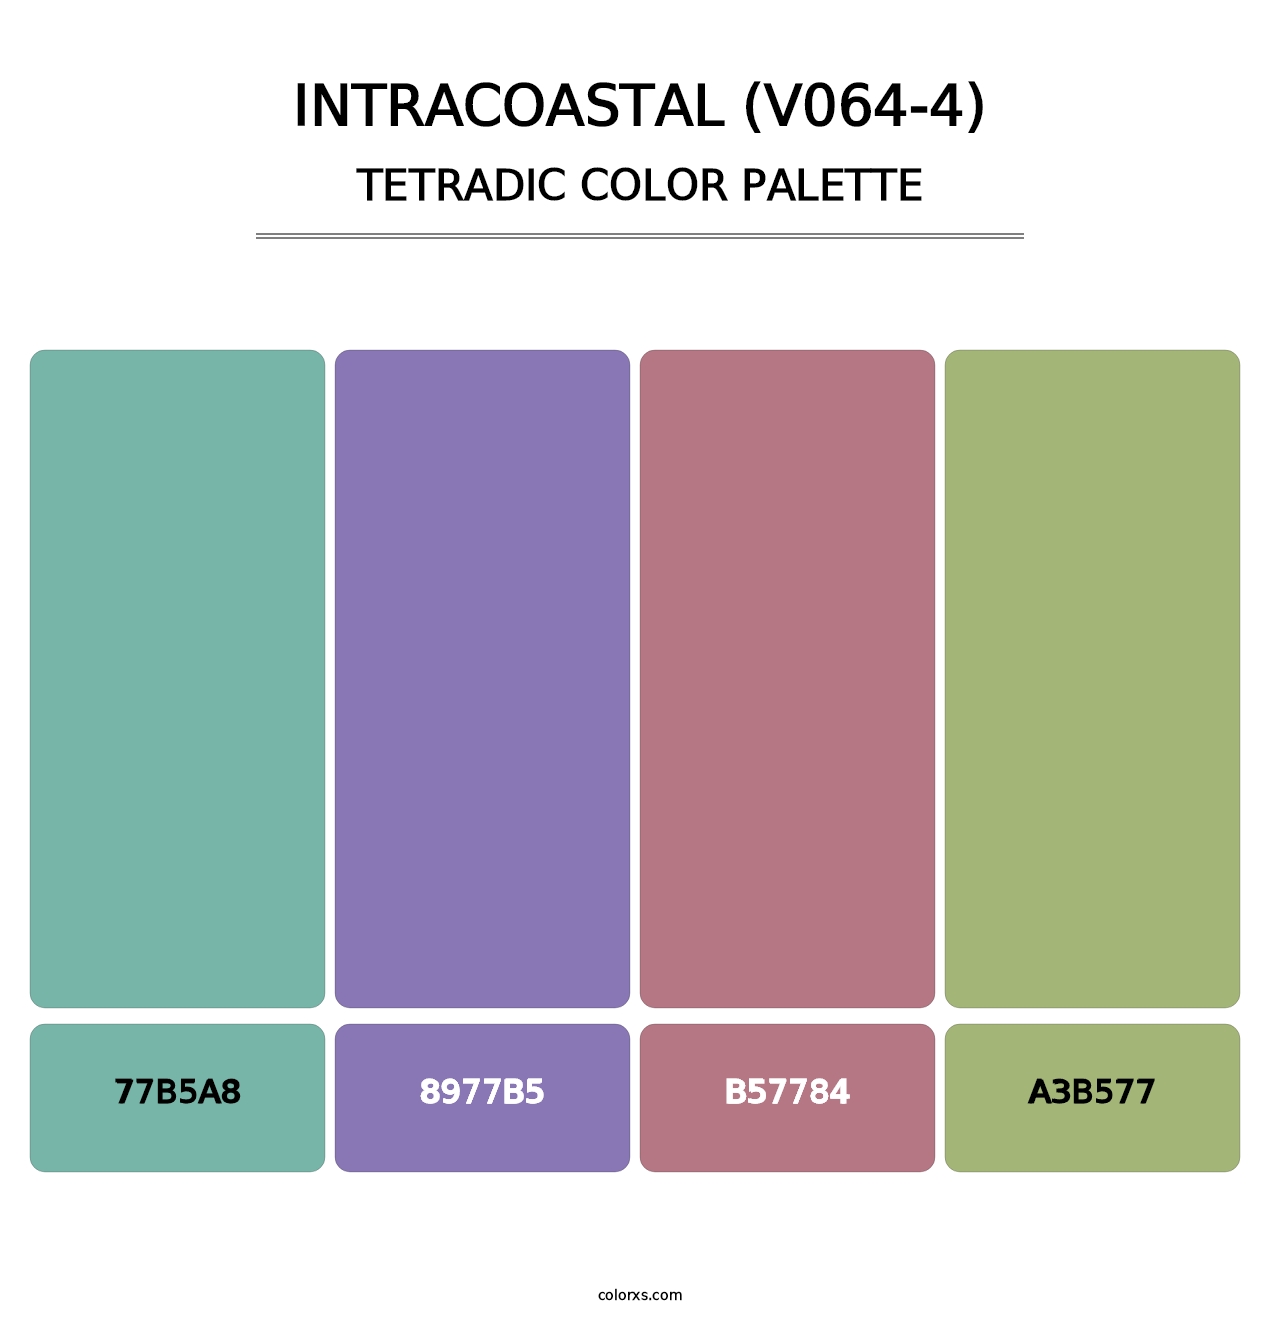 Intracoastal (V064-4) - Tetradic Color Palette